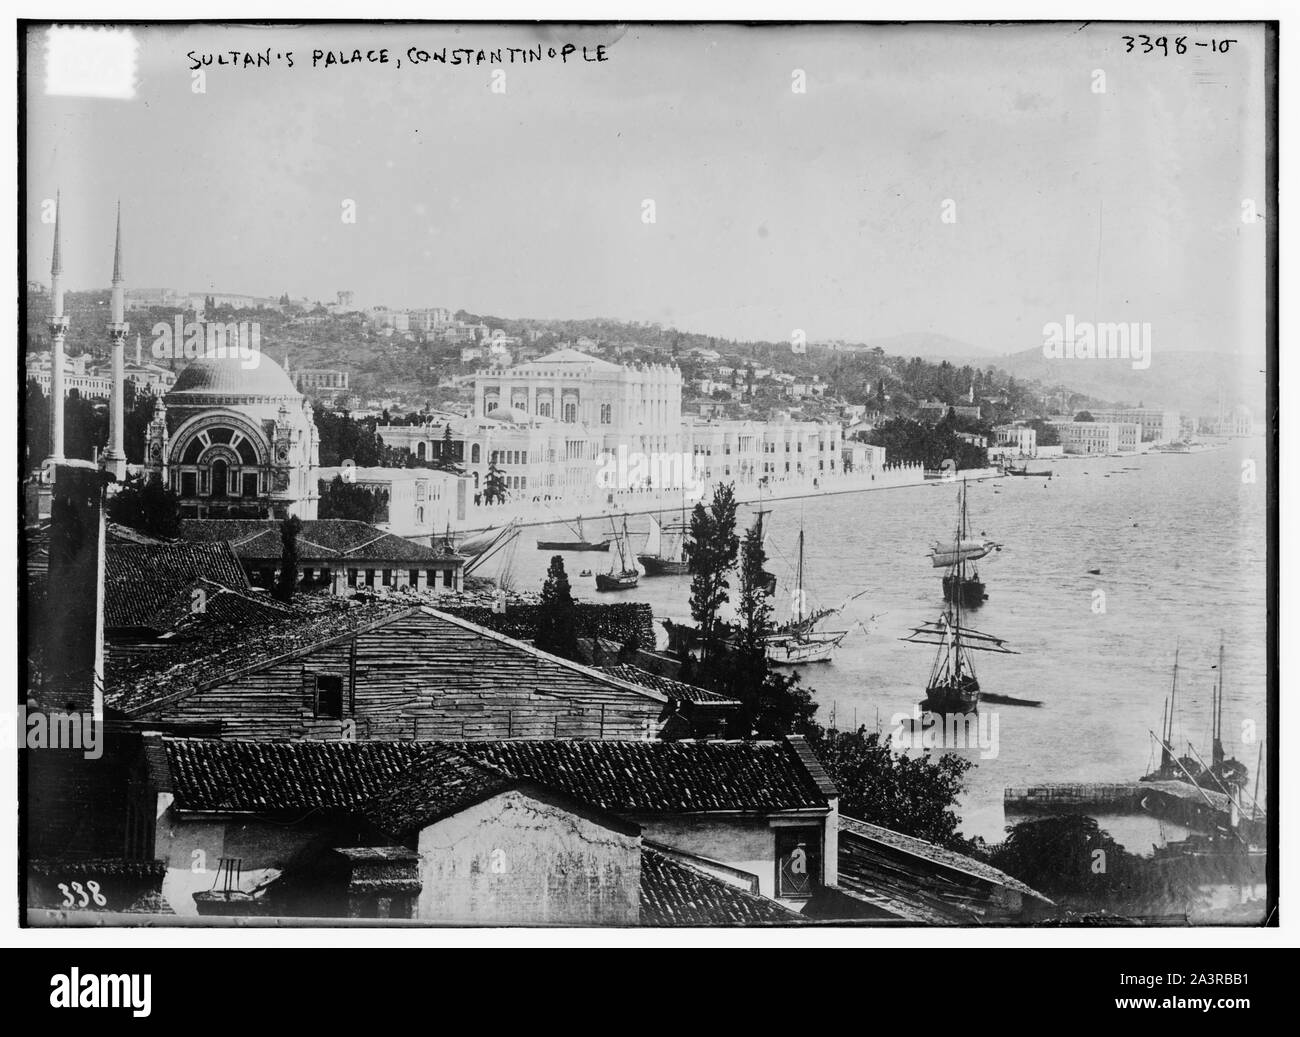 Sultan's Palace, Constantinople Stock Photo - Alamy